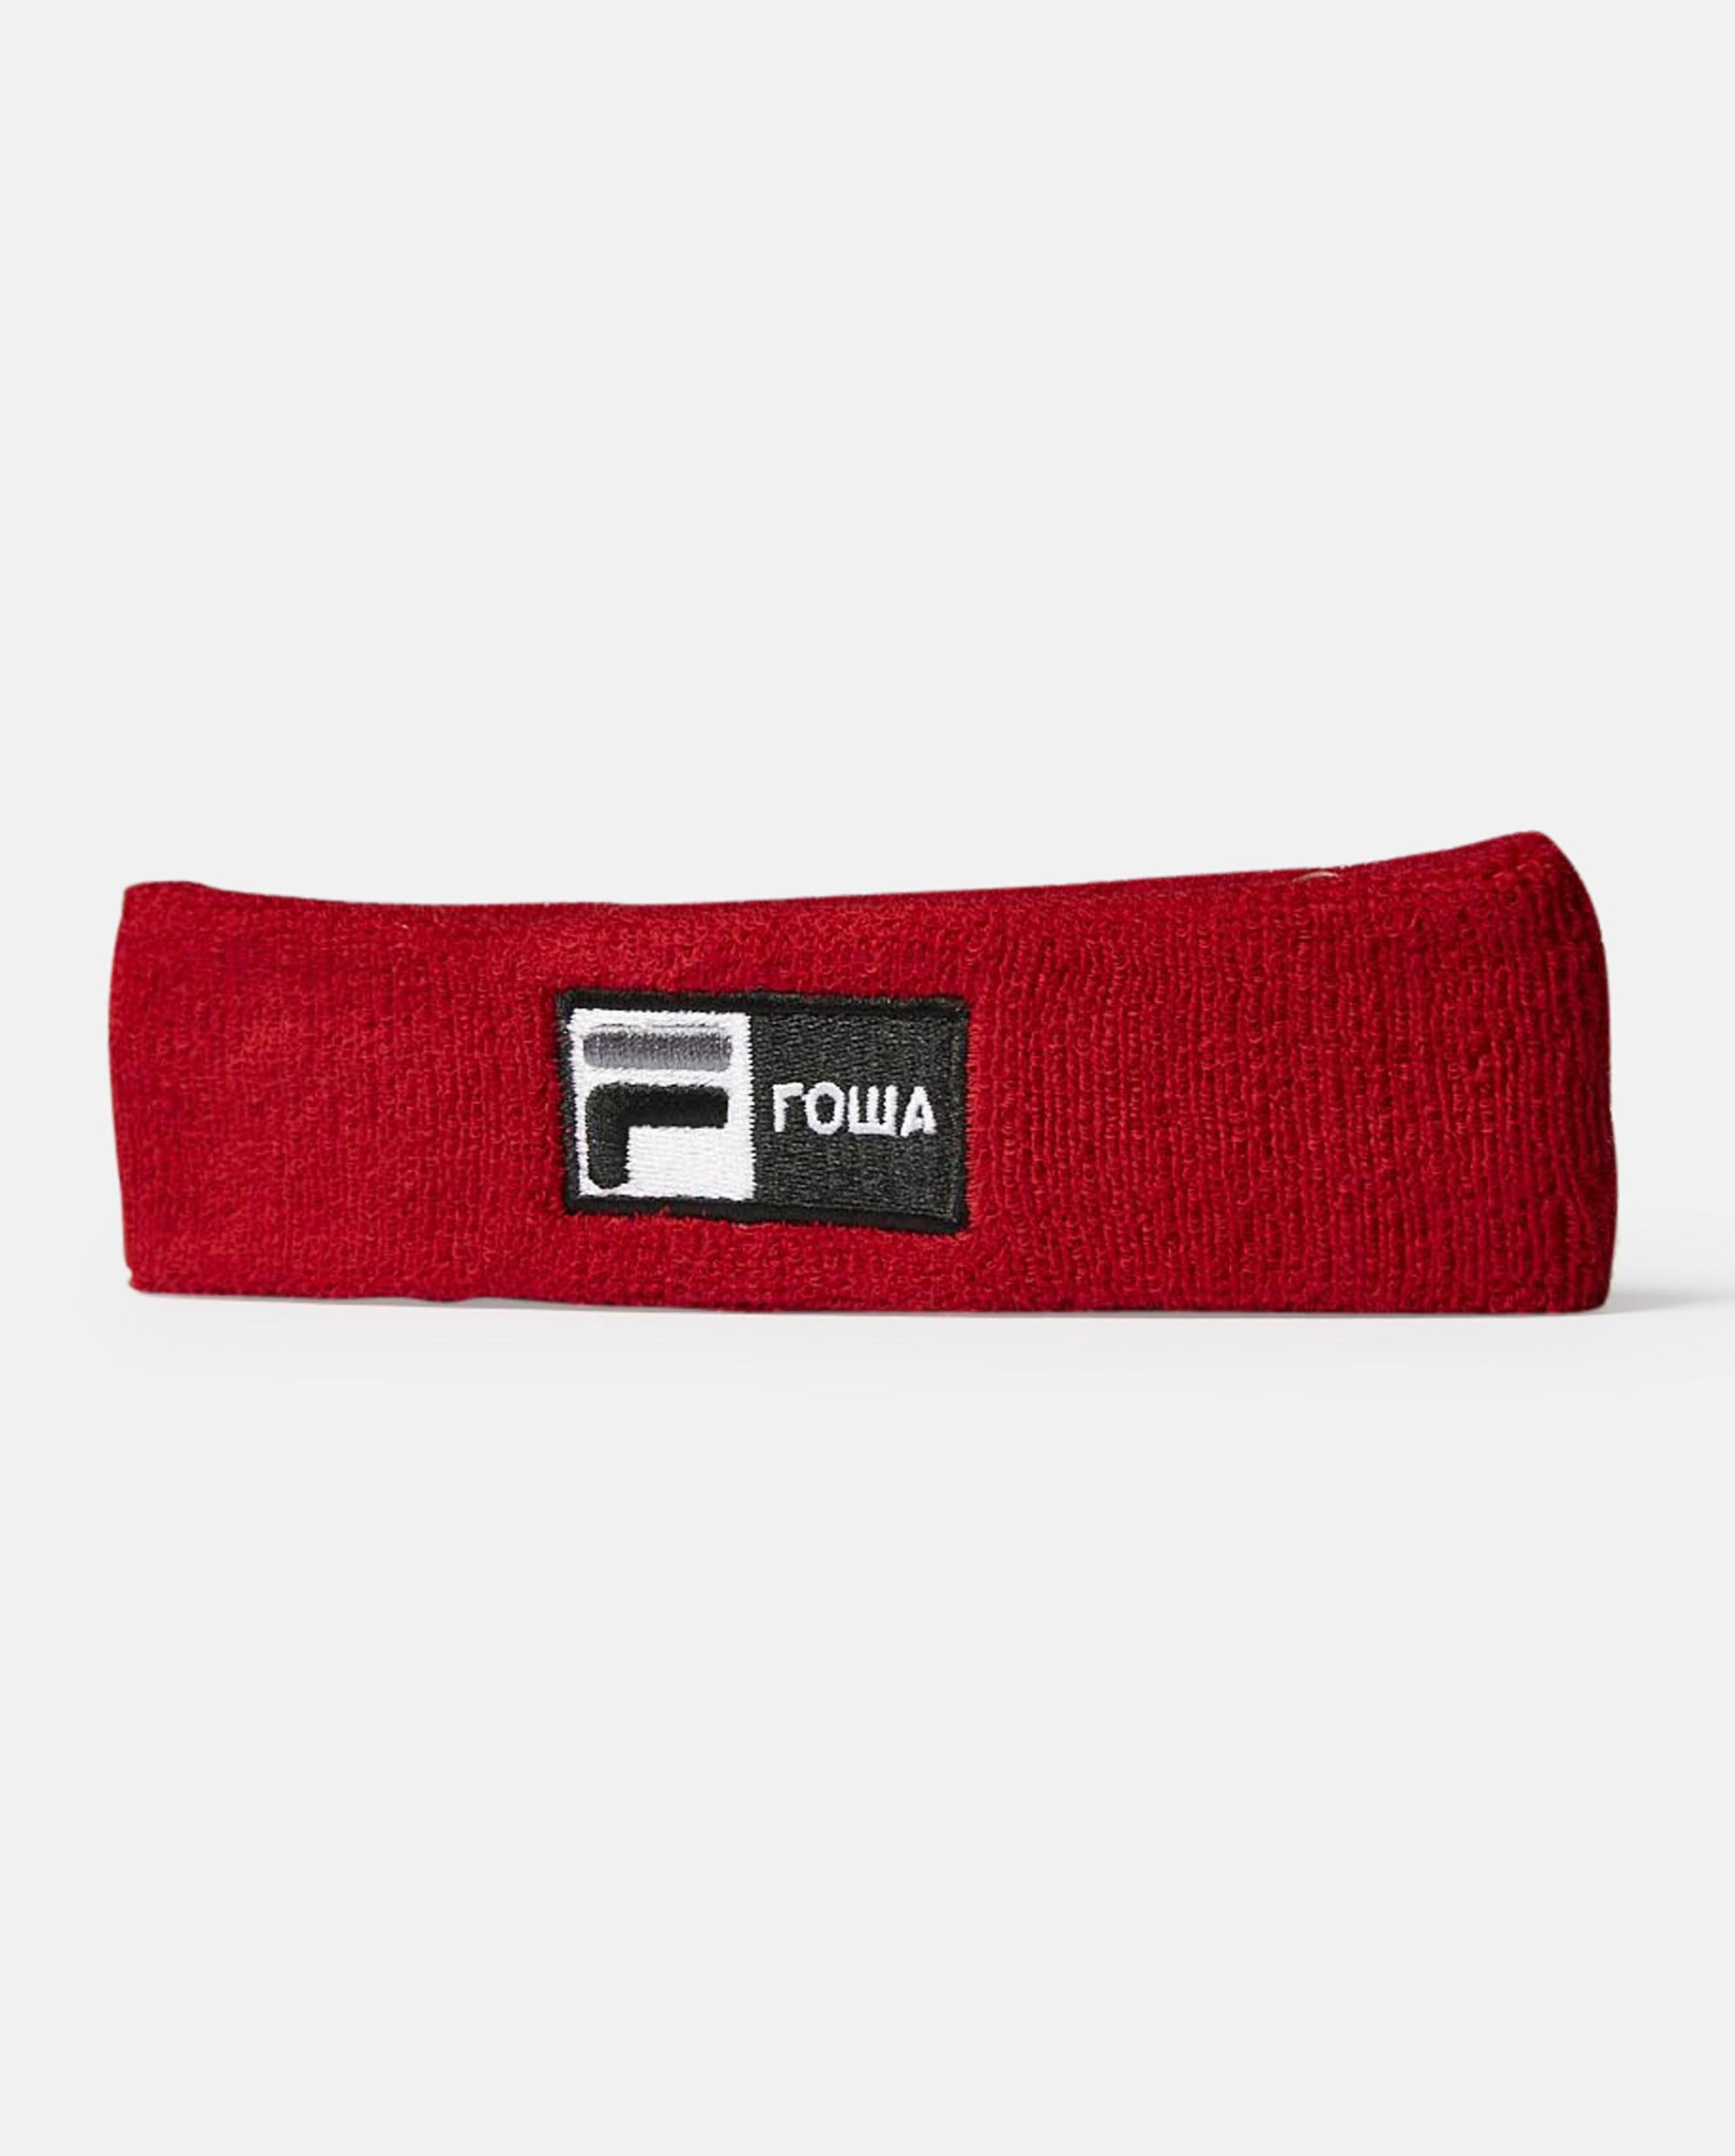 zoom Uforenelig Fellow Gosha Rubchinskiy Cotton Fila Headband in Red - Lyst